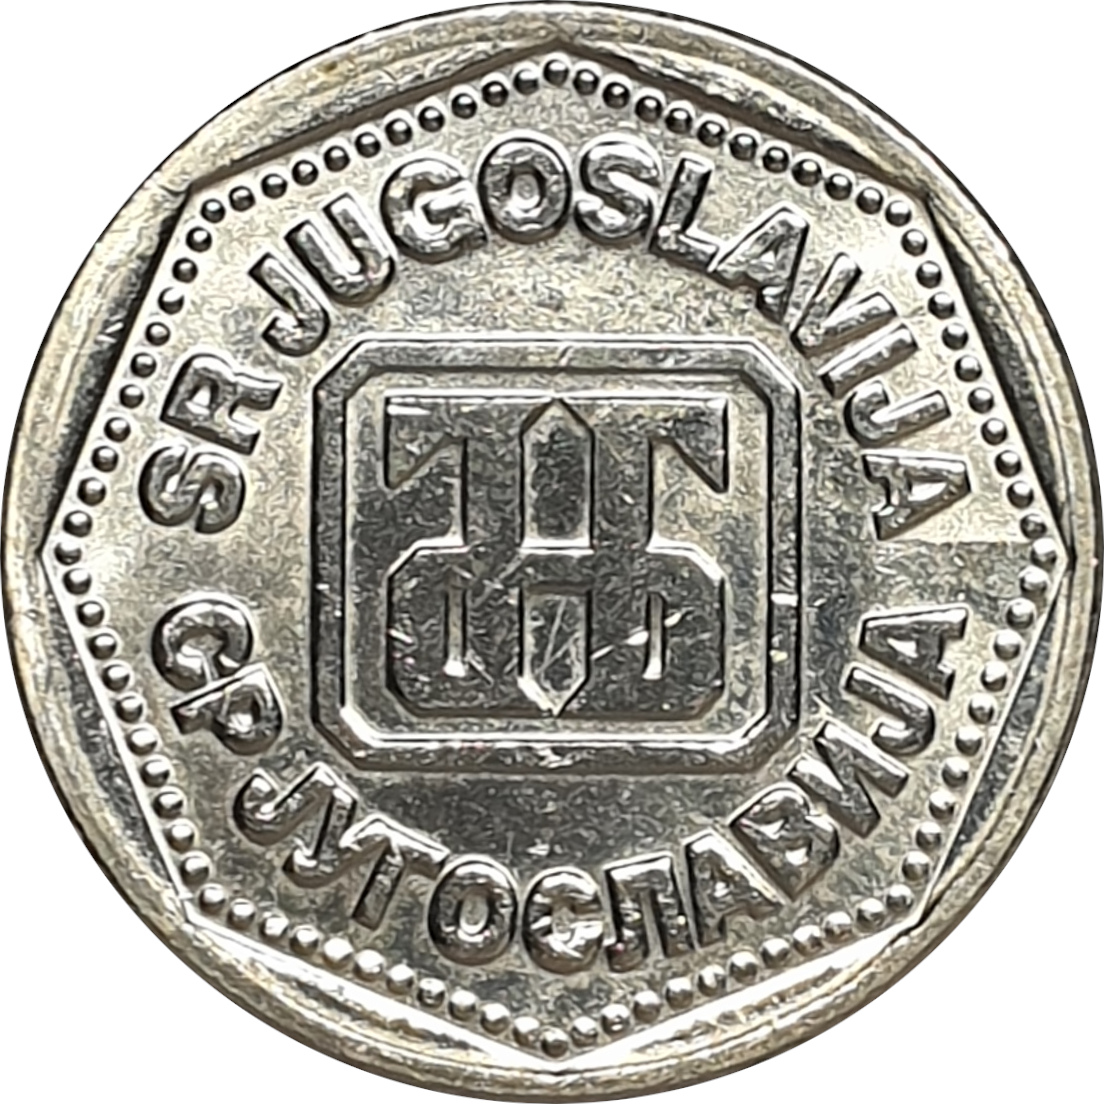 10 dinara - Monogram - Cupronickel aluminium